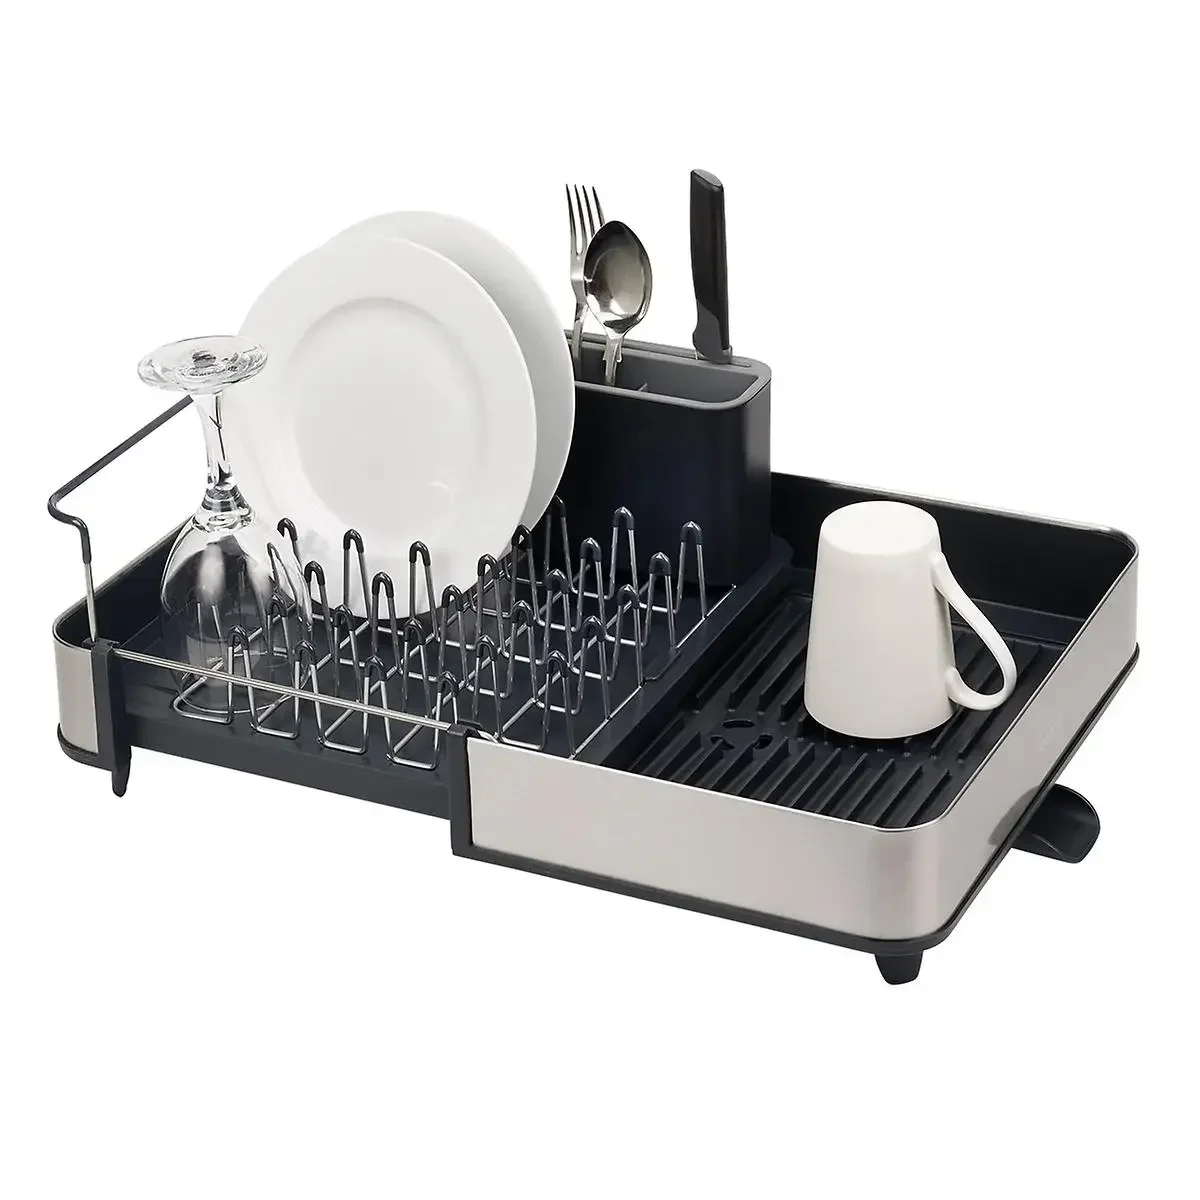 

Hot Extend Expandable Dish Drainer accessories organizer kitchen sink holder